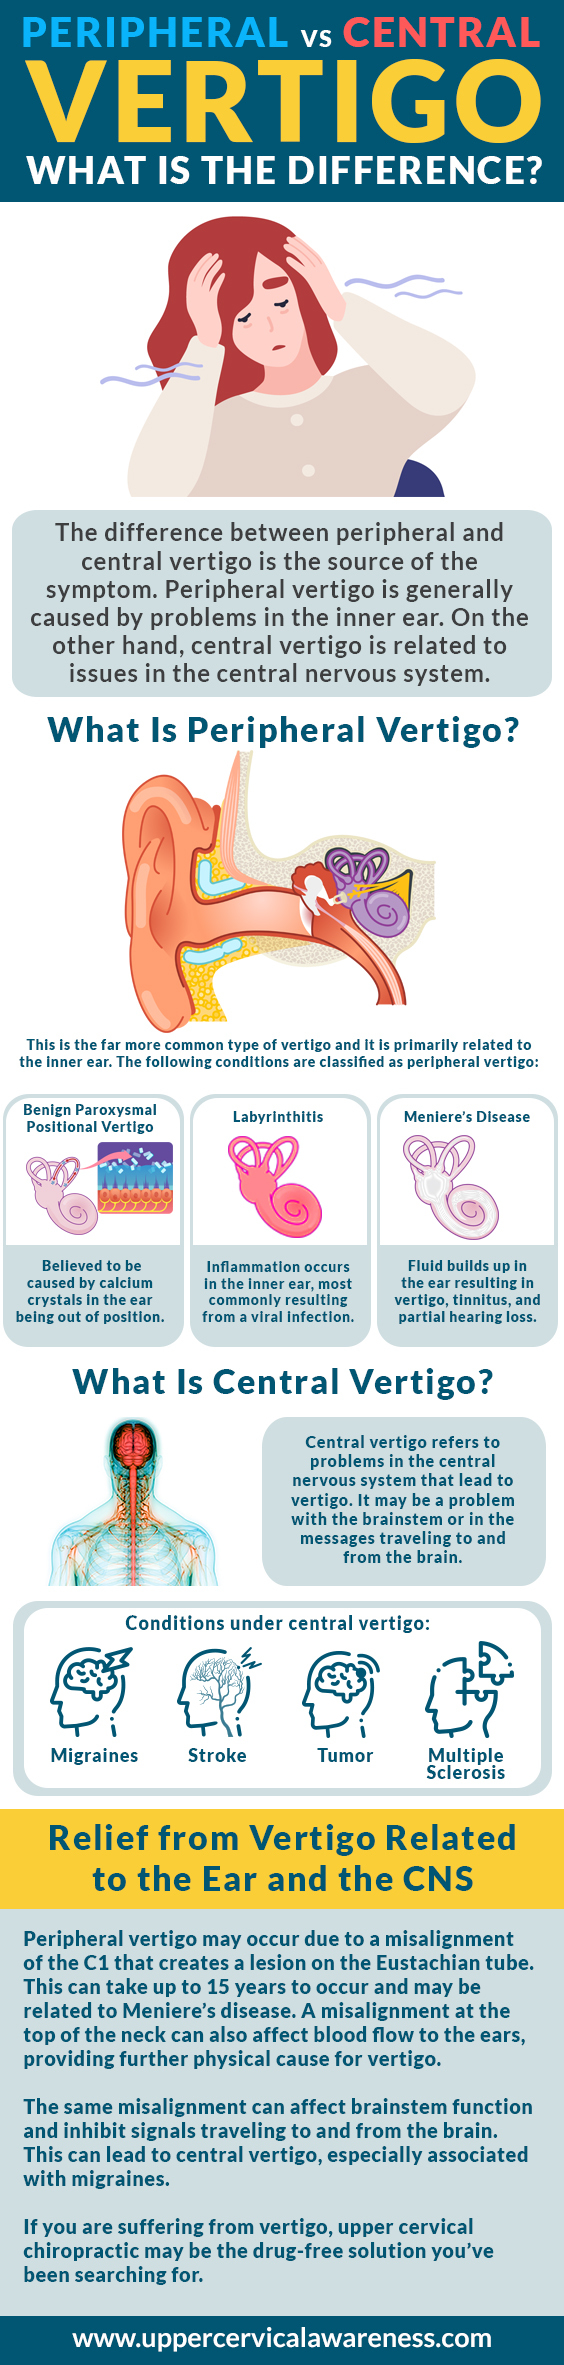 Peripheral Vertigo Vs Central Vertigo – What Is the Difference?